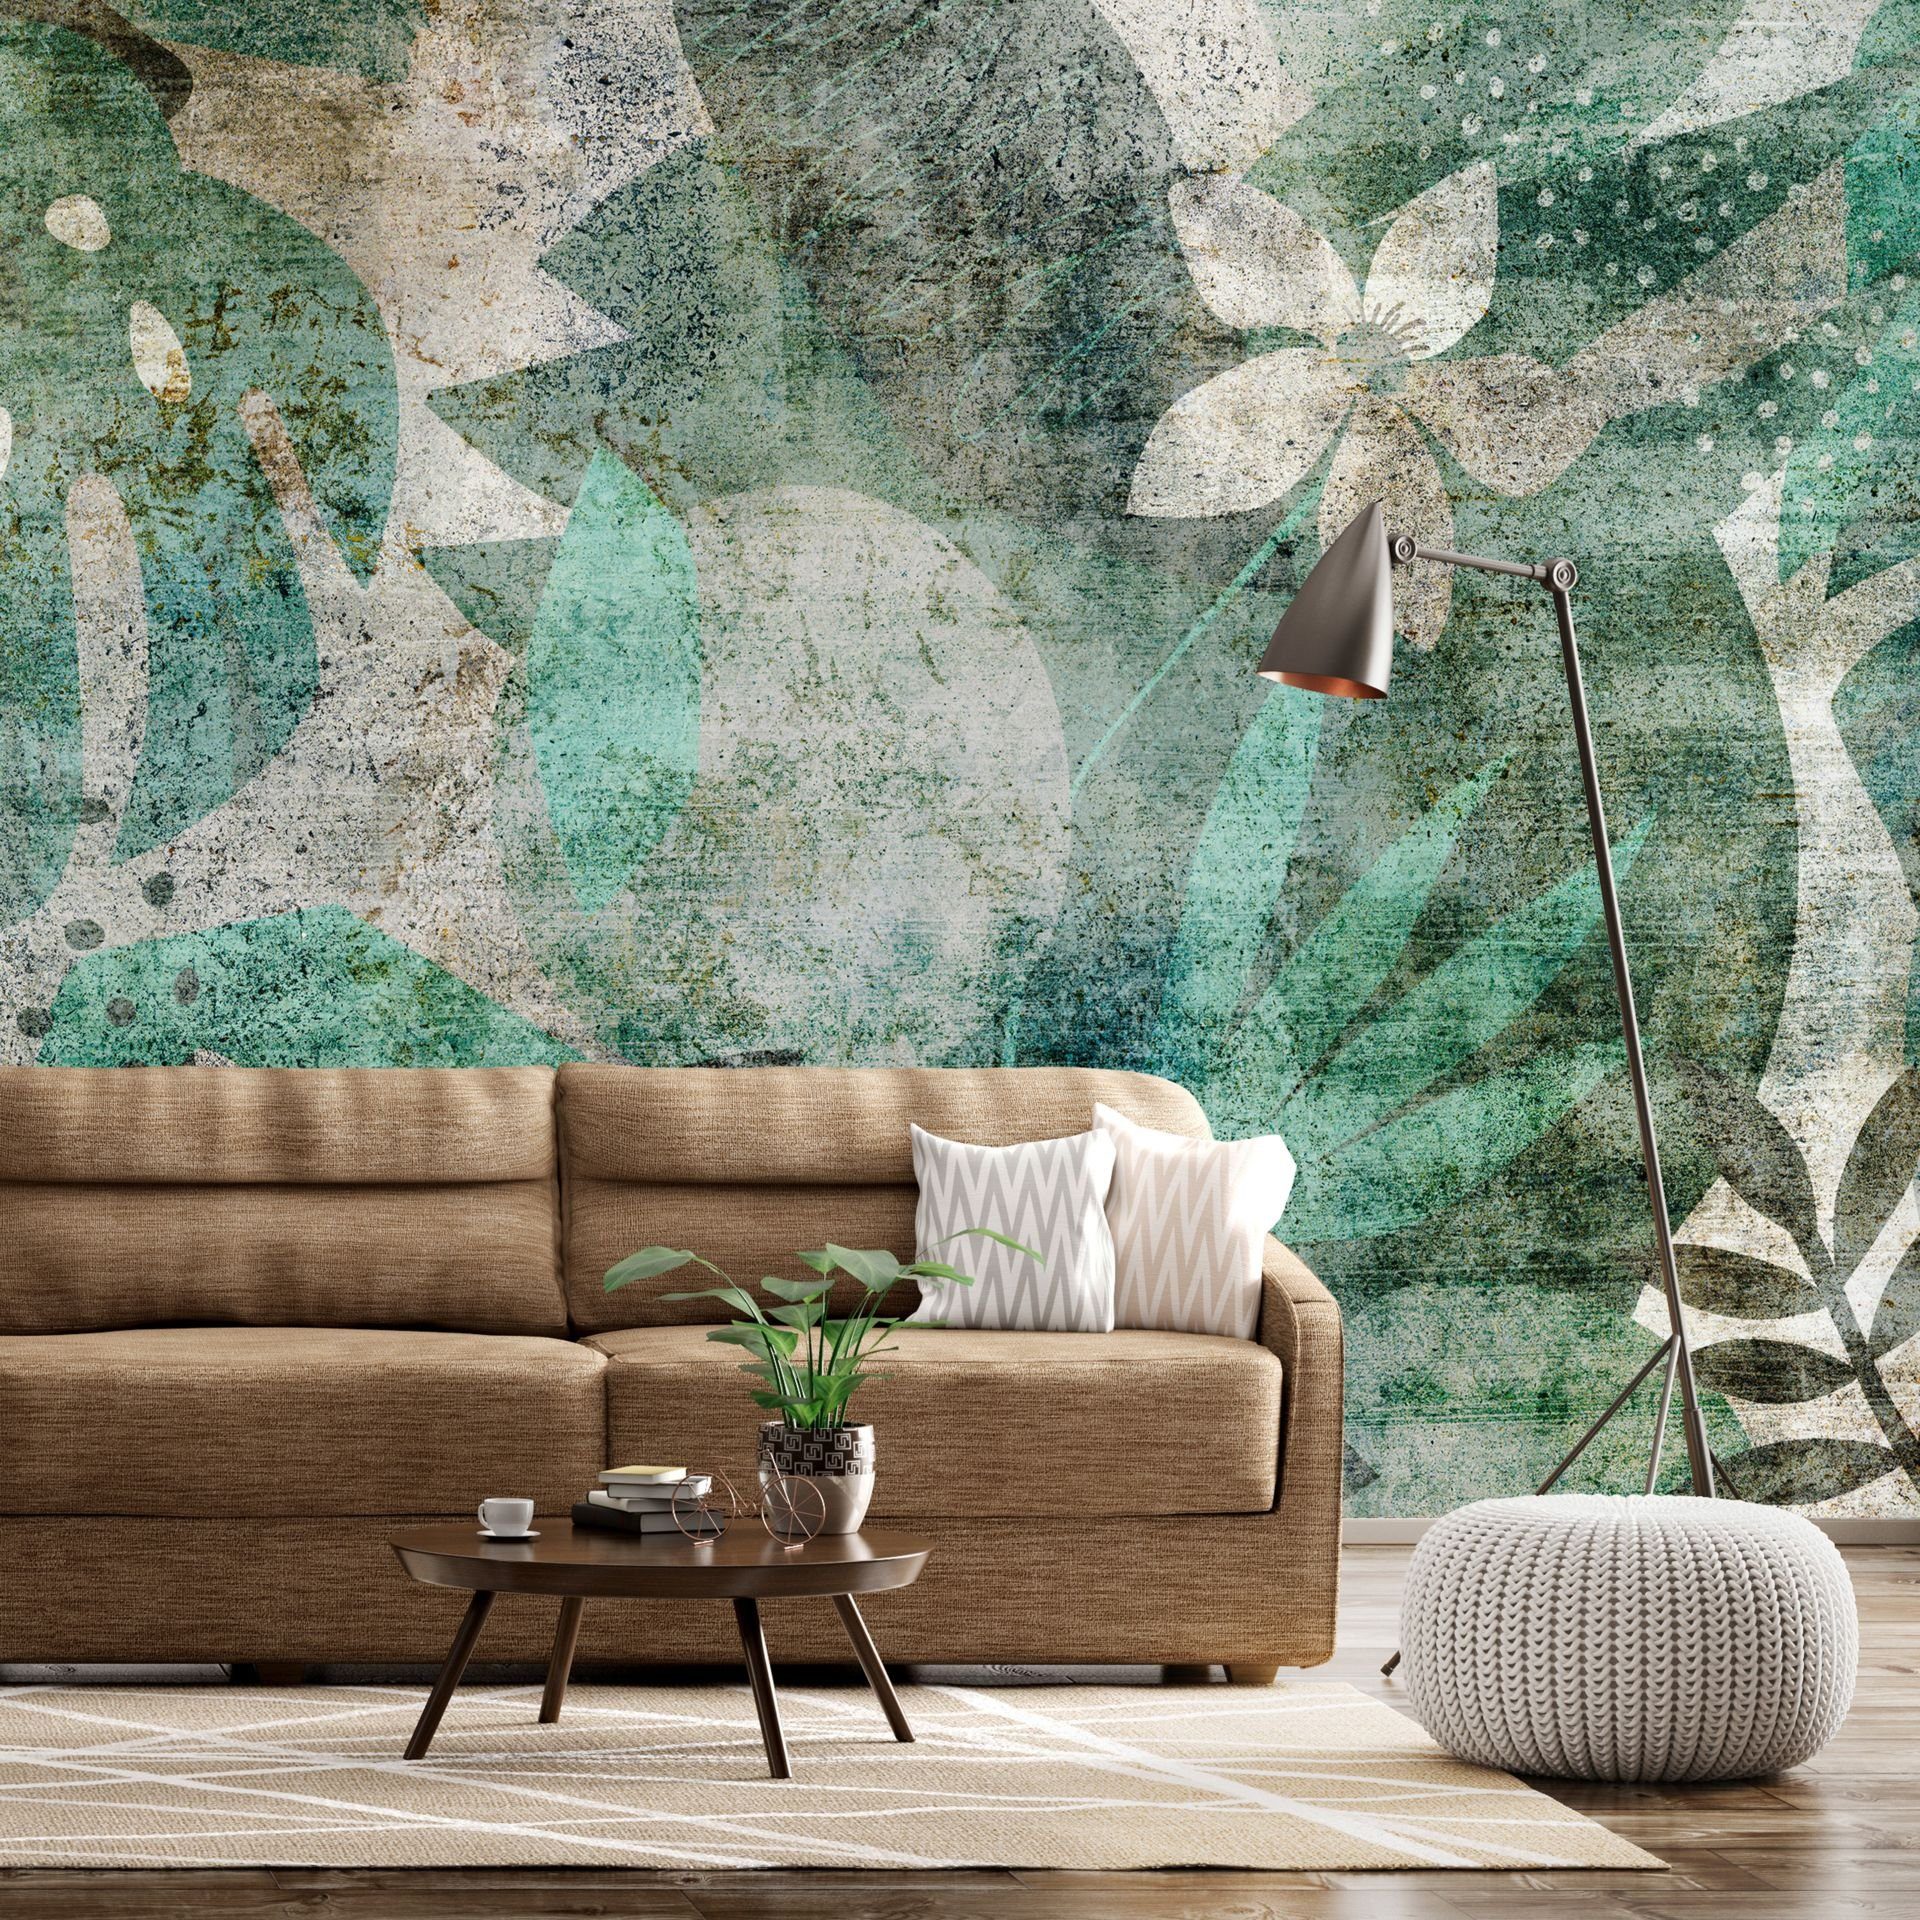 KUNSTLOFT Vliestapete Floristic Mural 0.98x0.7 m, halb-matt, matt, lichtbeständige Design Tapete